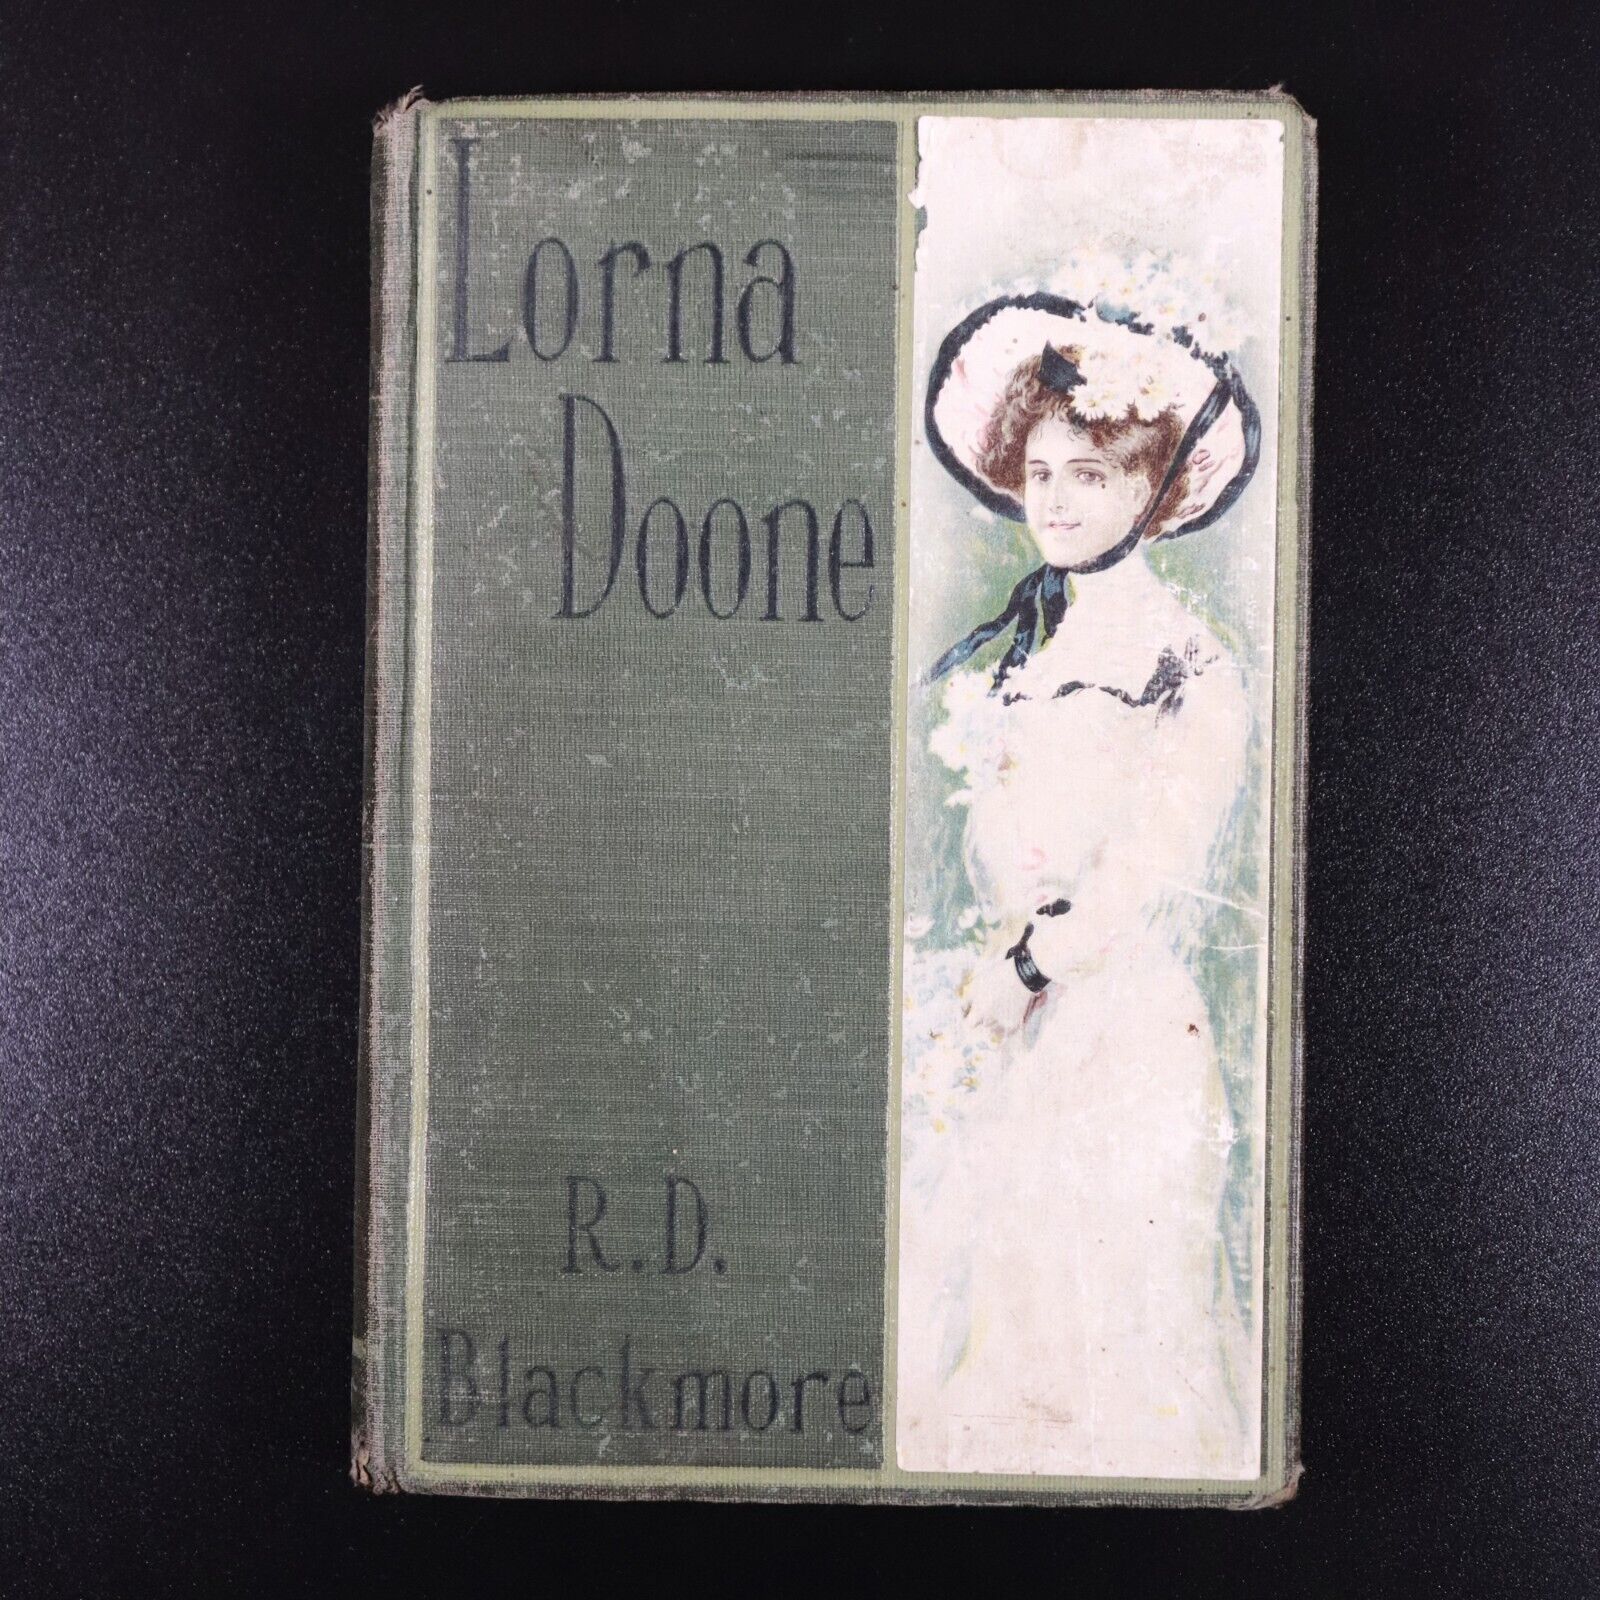 c1900 Lorna Doone Romance Exmoor by R.D. Blackmore Antique Classic Fiction Book - 0